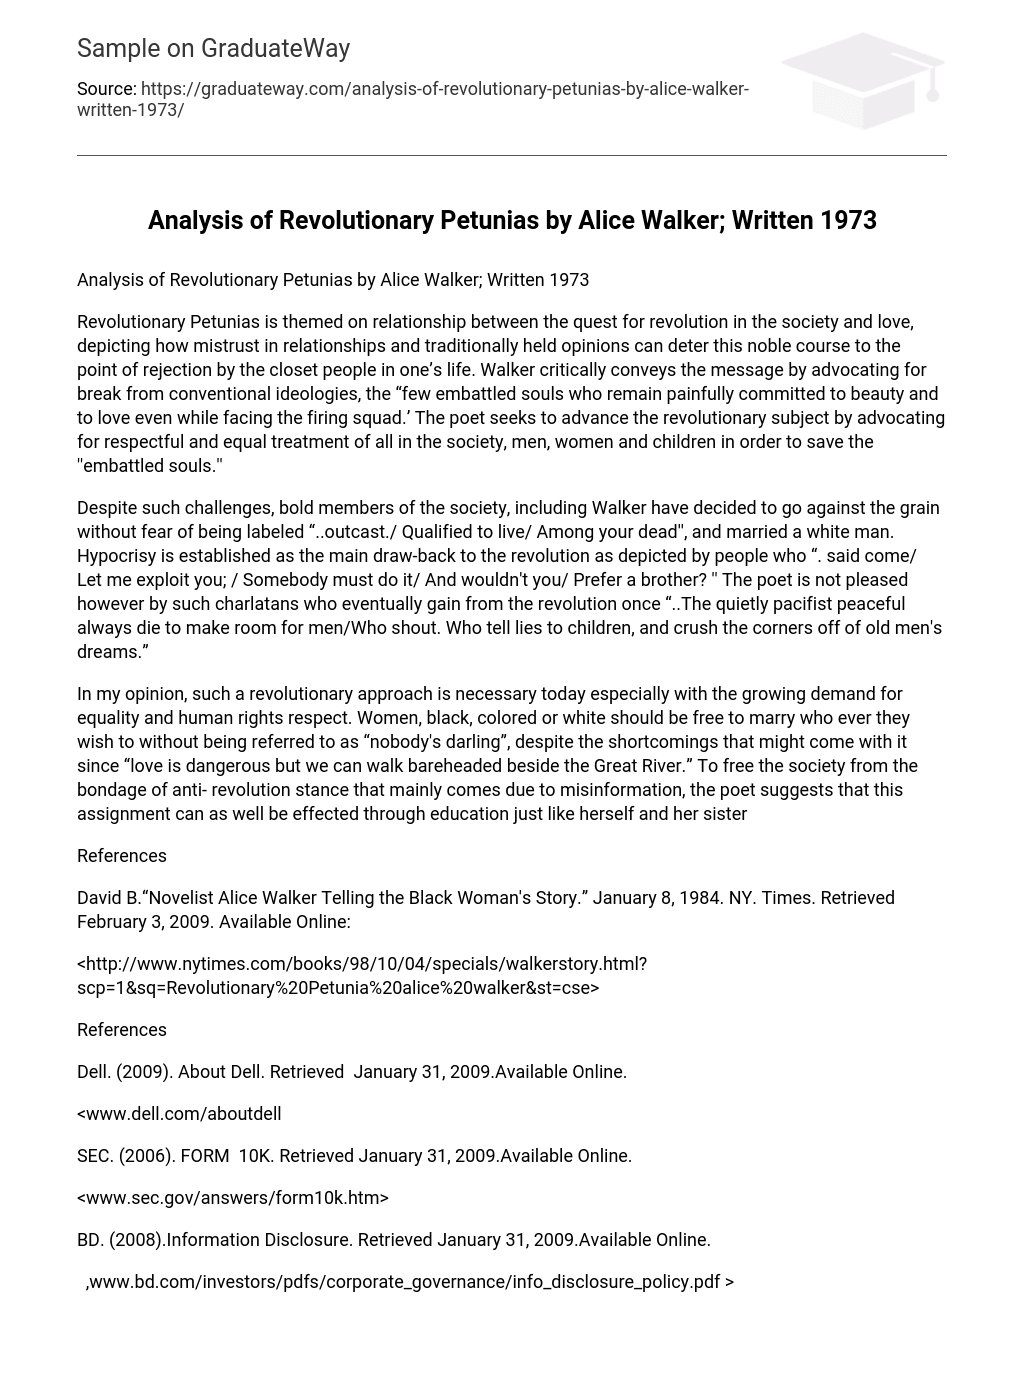 Analysis of Revolutionary Petunias by Alice Walker; Written 1973